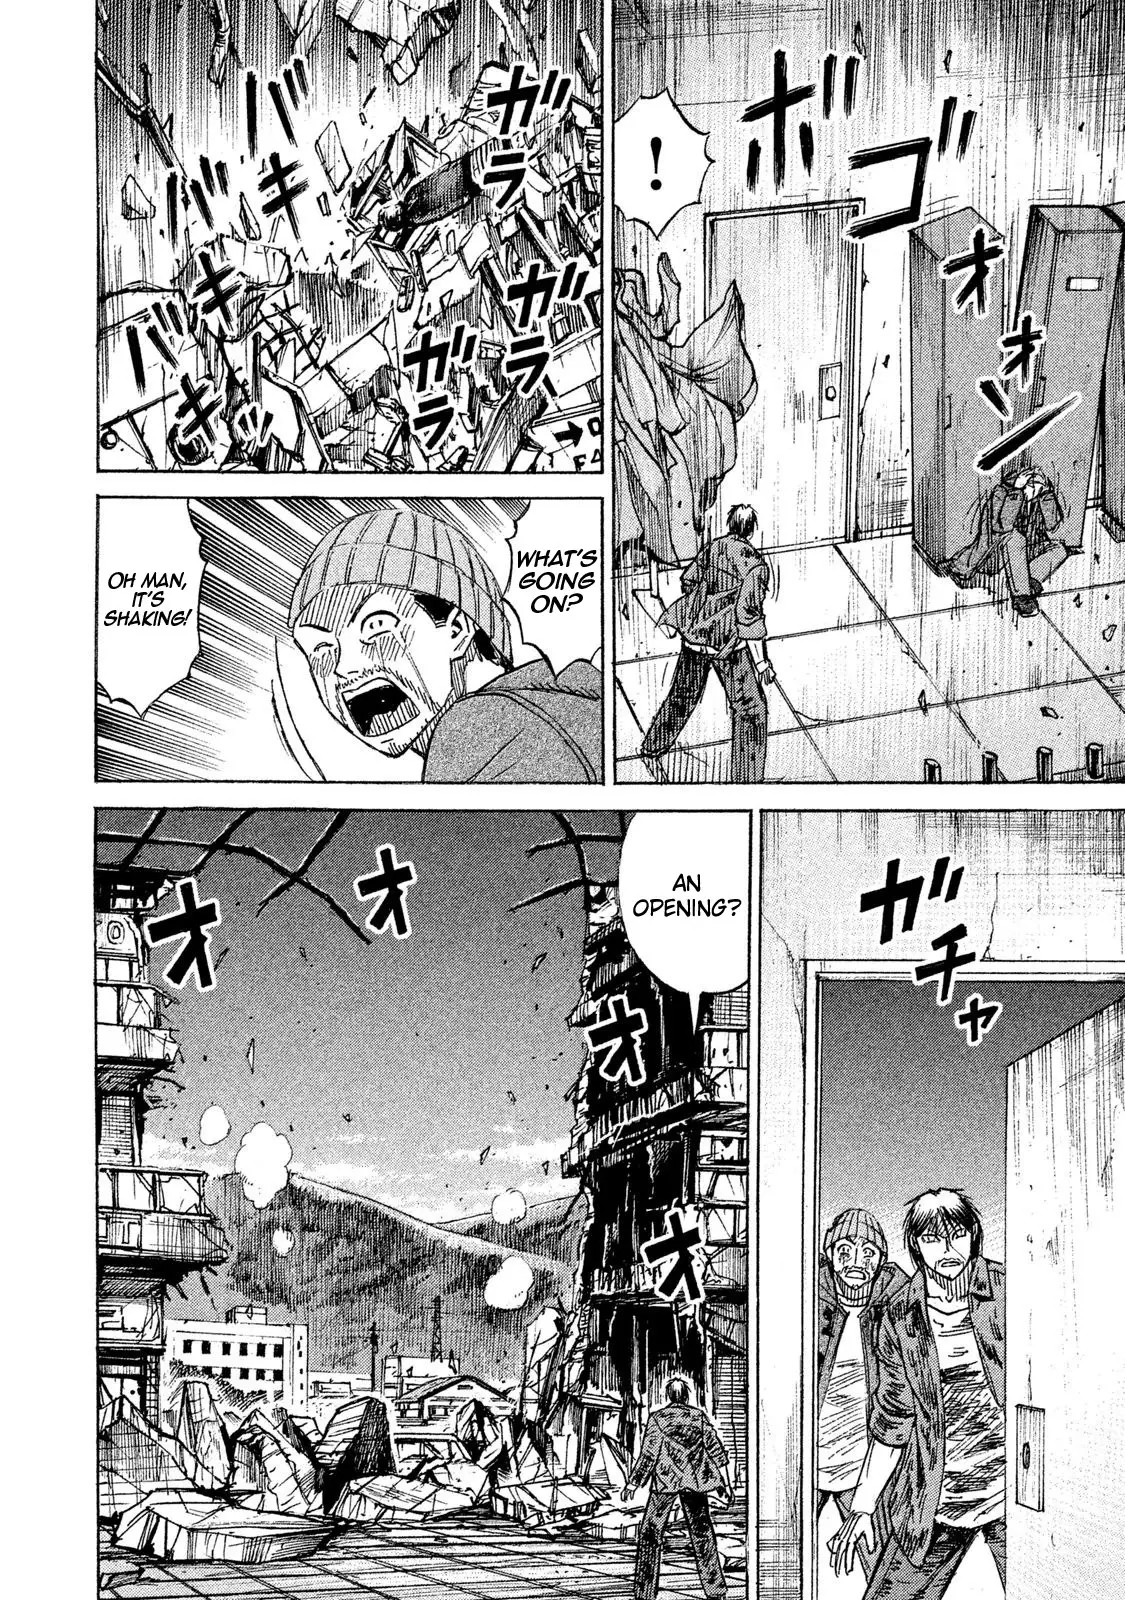 Higanjima - 48 Days Later - 18 page 19-26c2a2ff